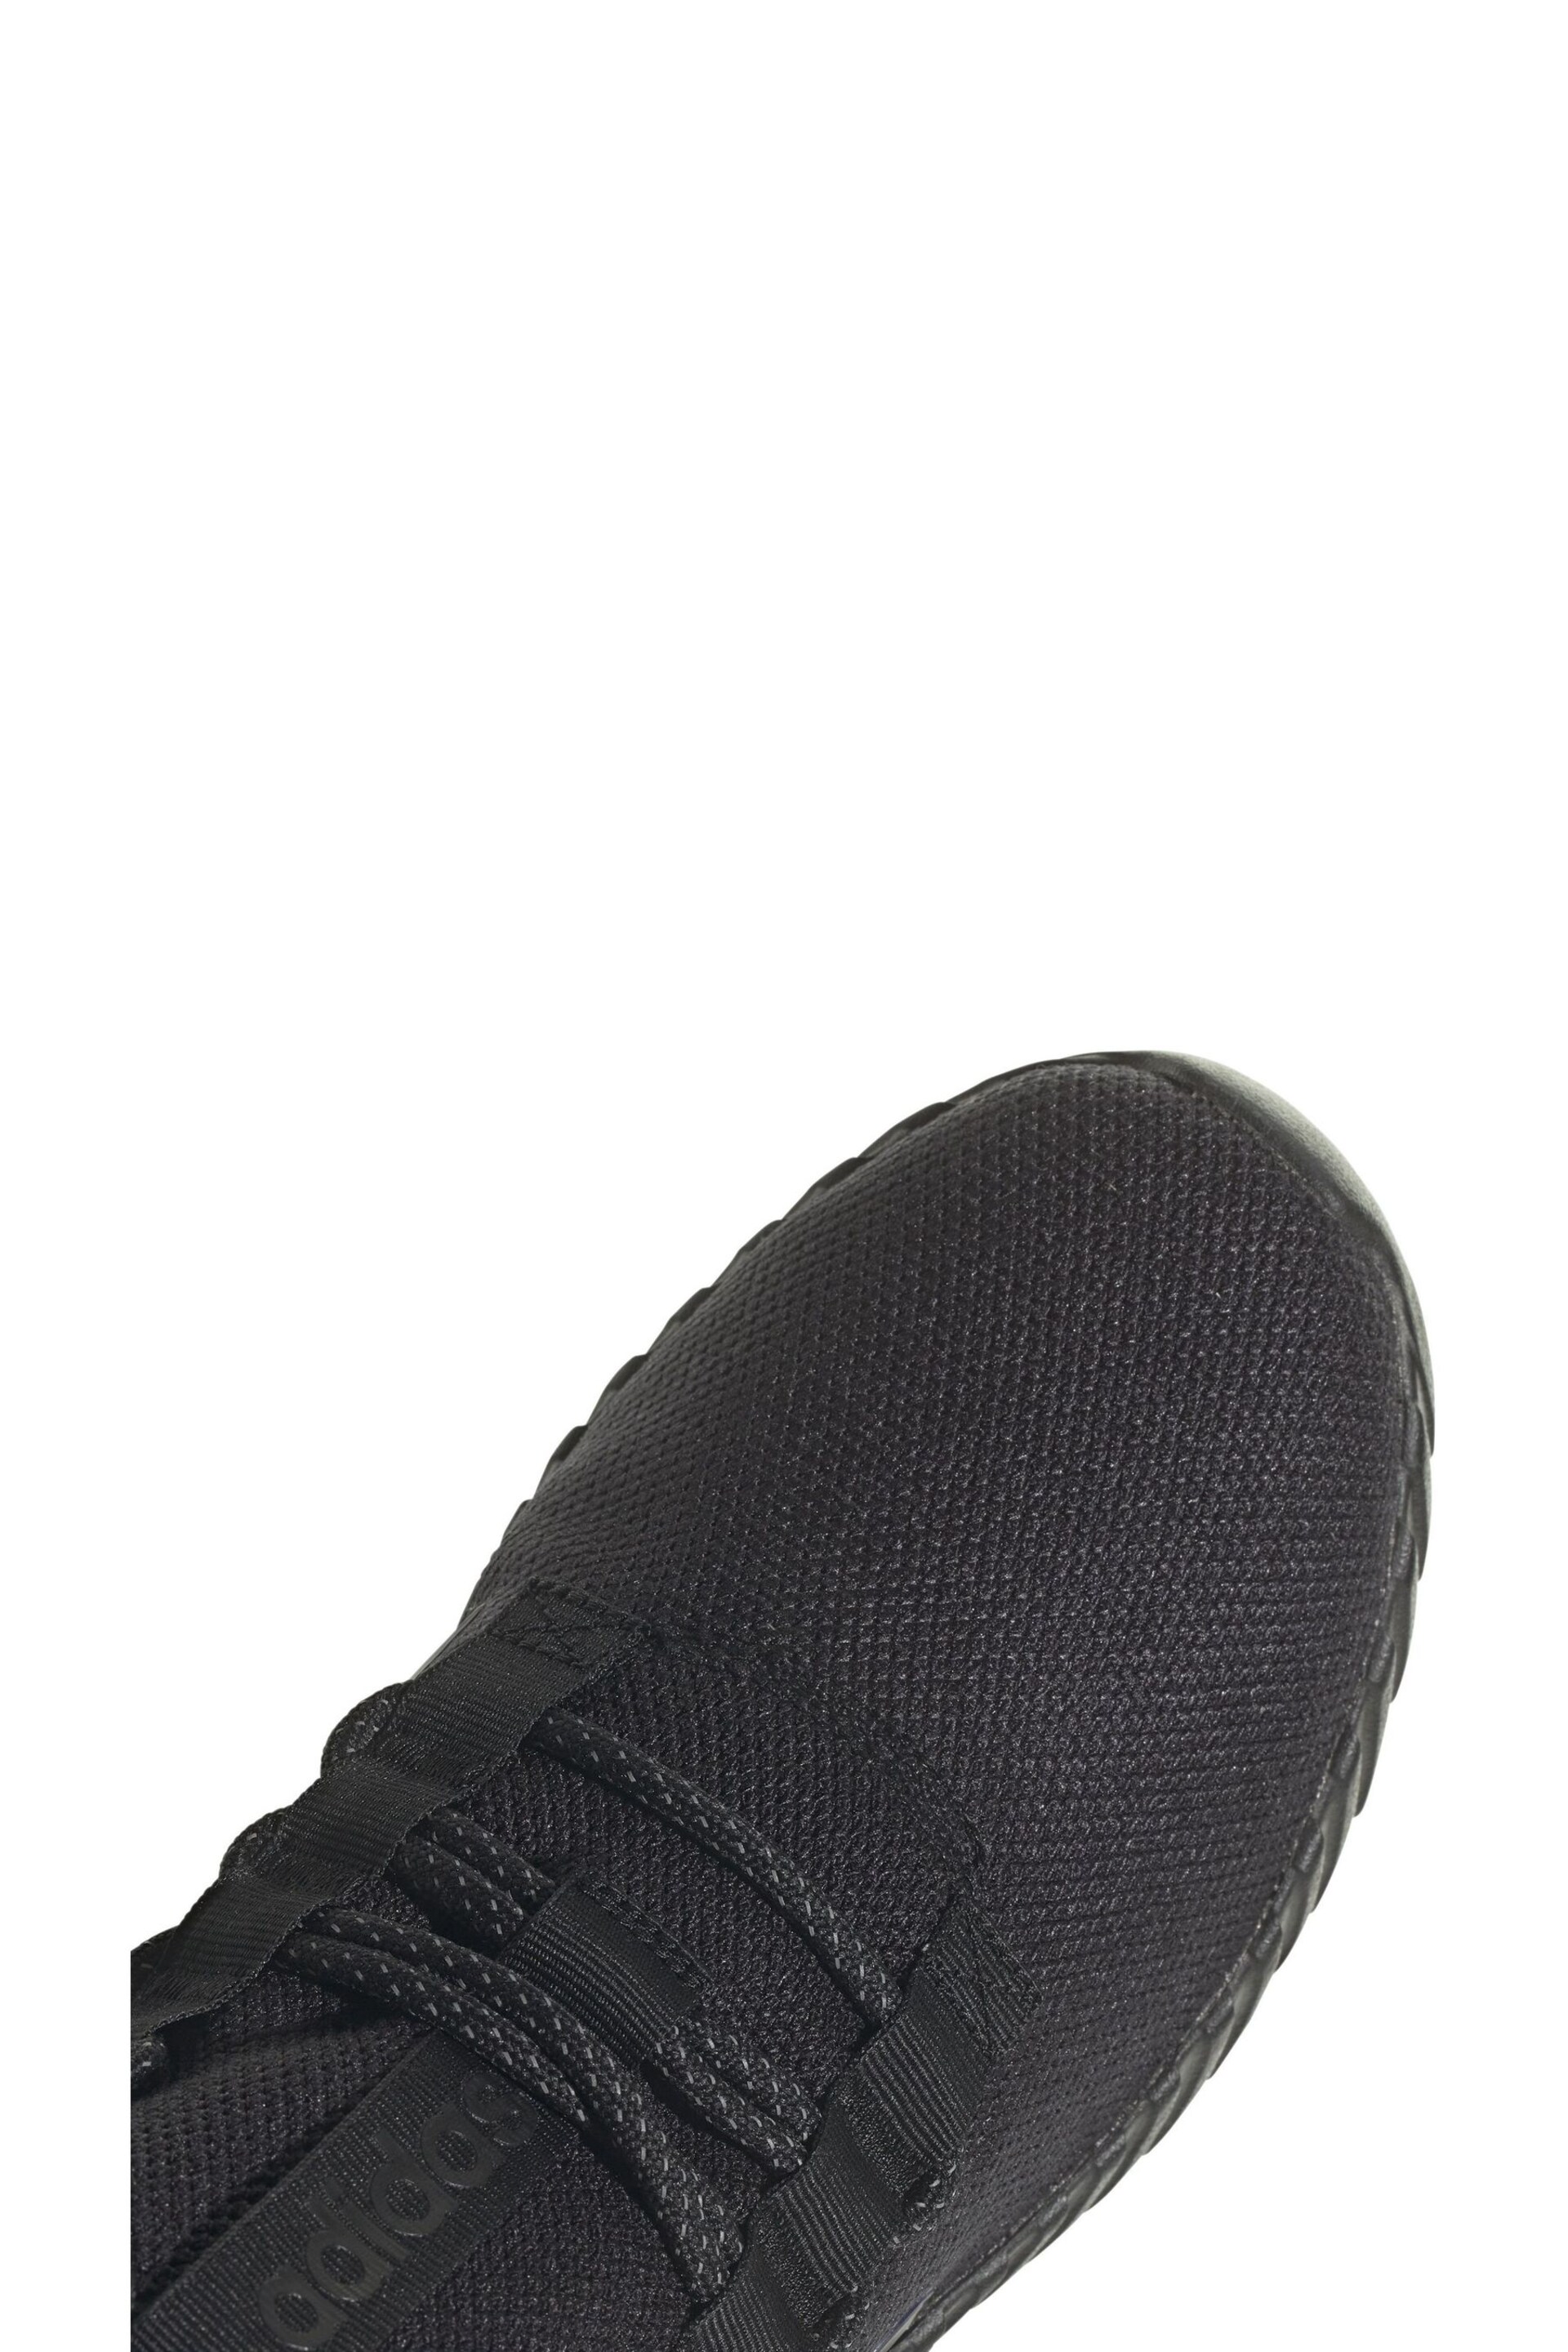 adidas dark Black Sportswear Kantana Trainers - Image 9 of 9